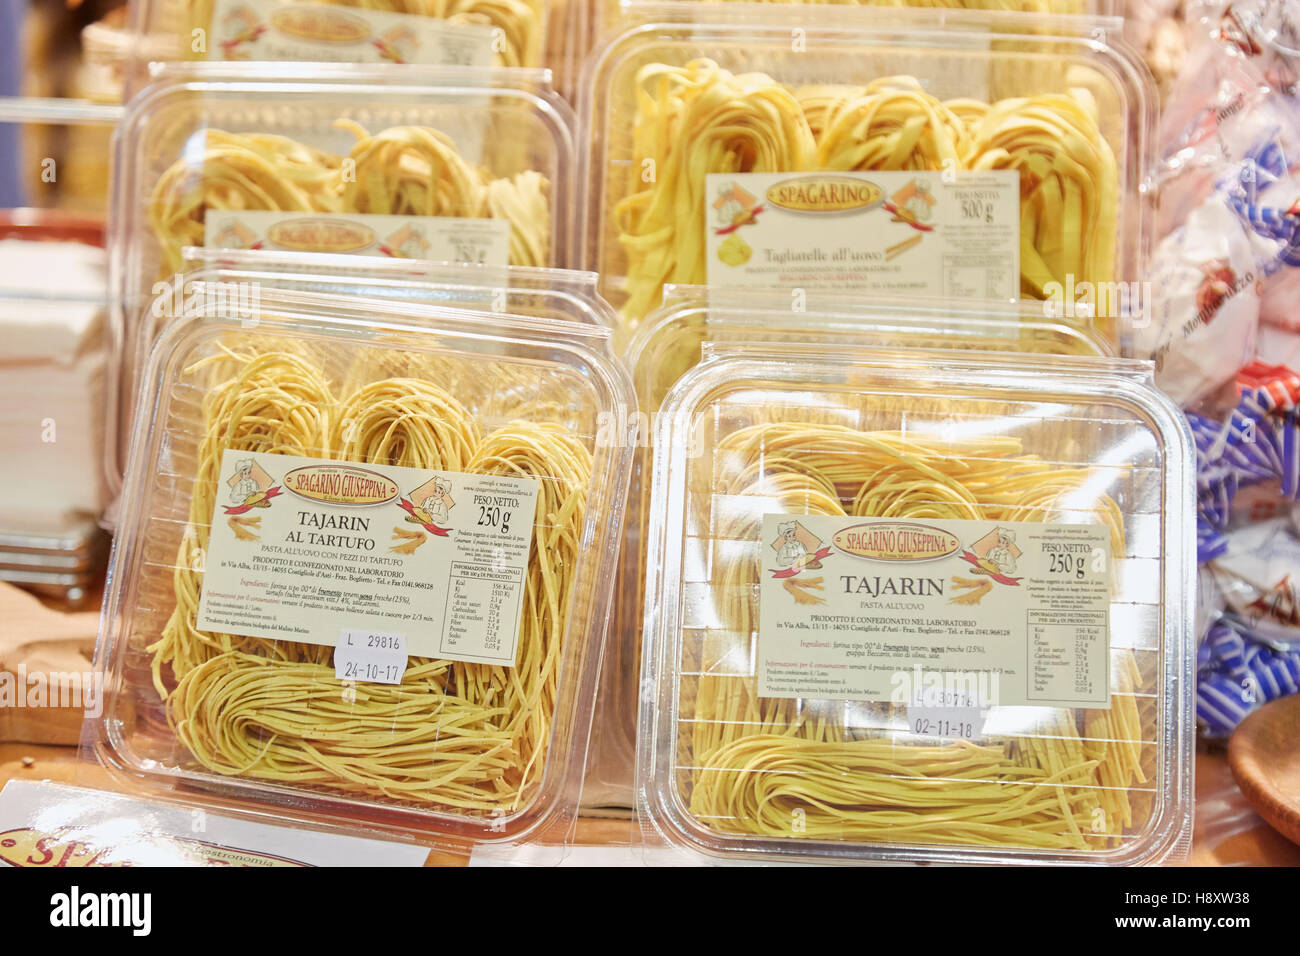 Tajarin fresh truffle flavored pasta on sale during Alba White Truffle Fair in Alba, Italy Stock Photo